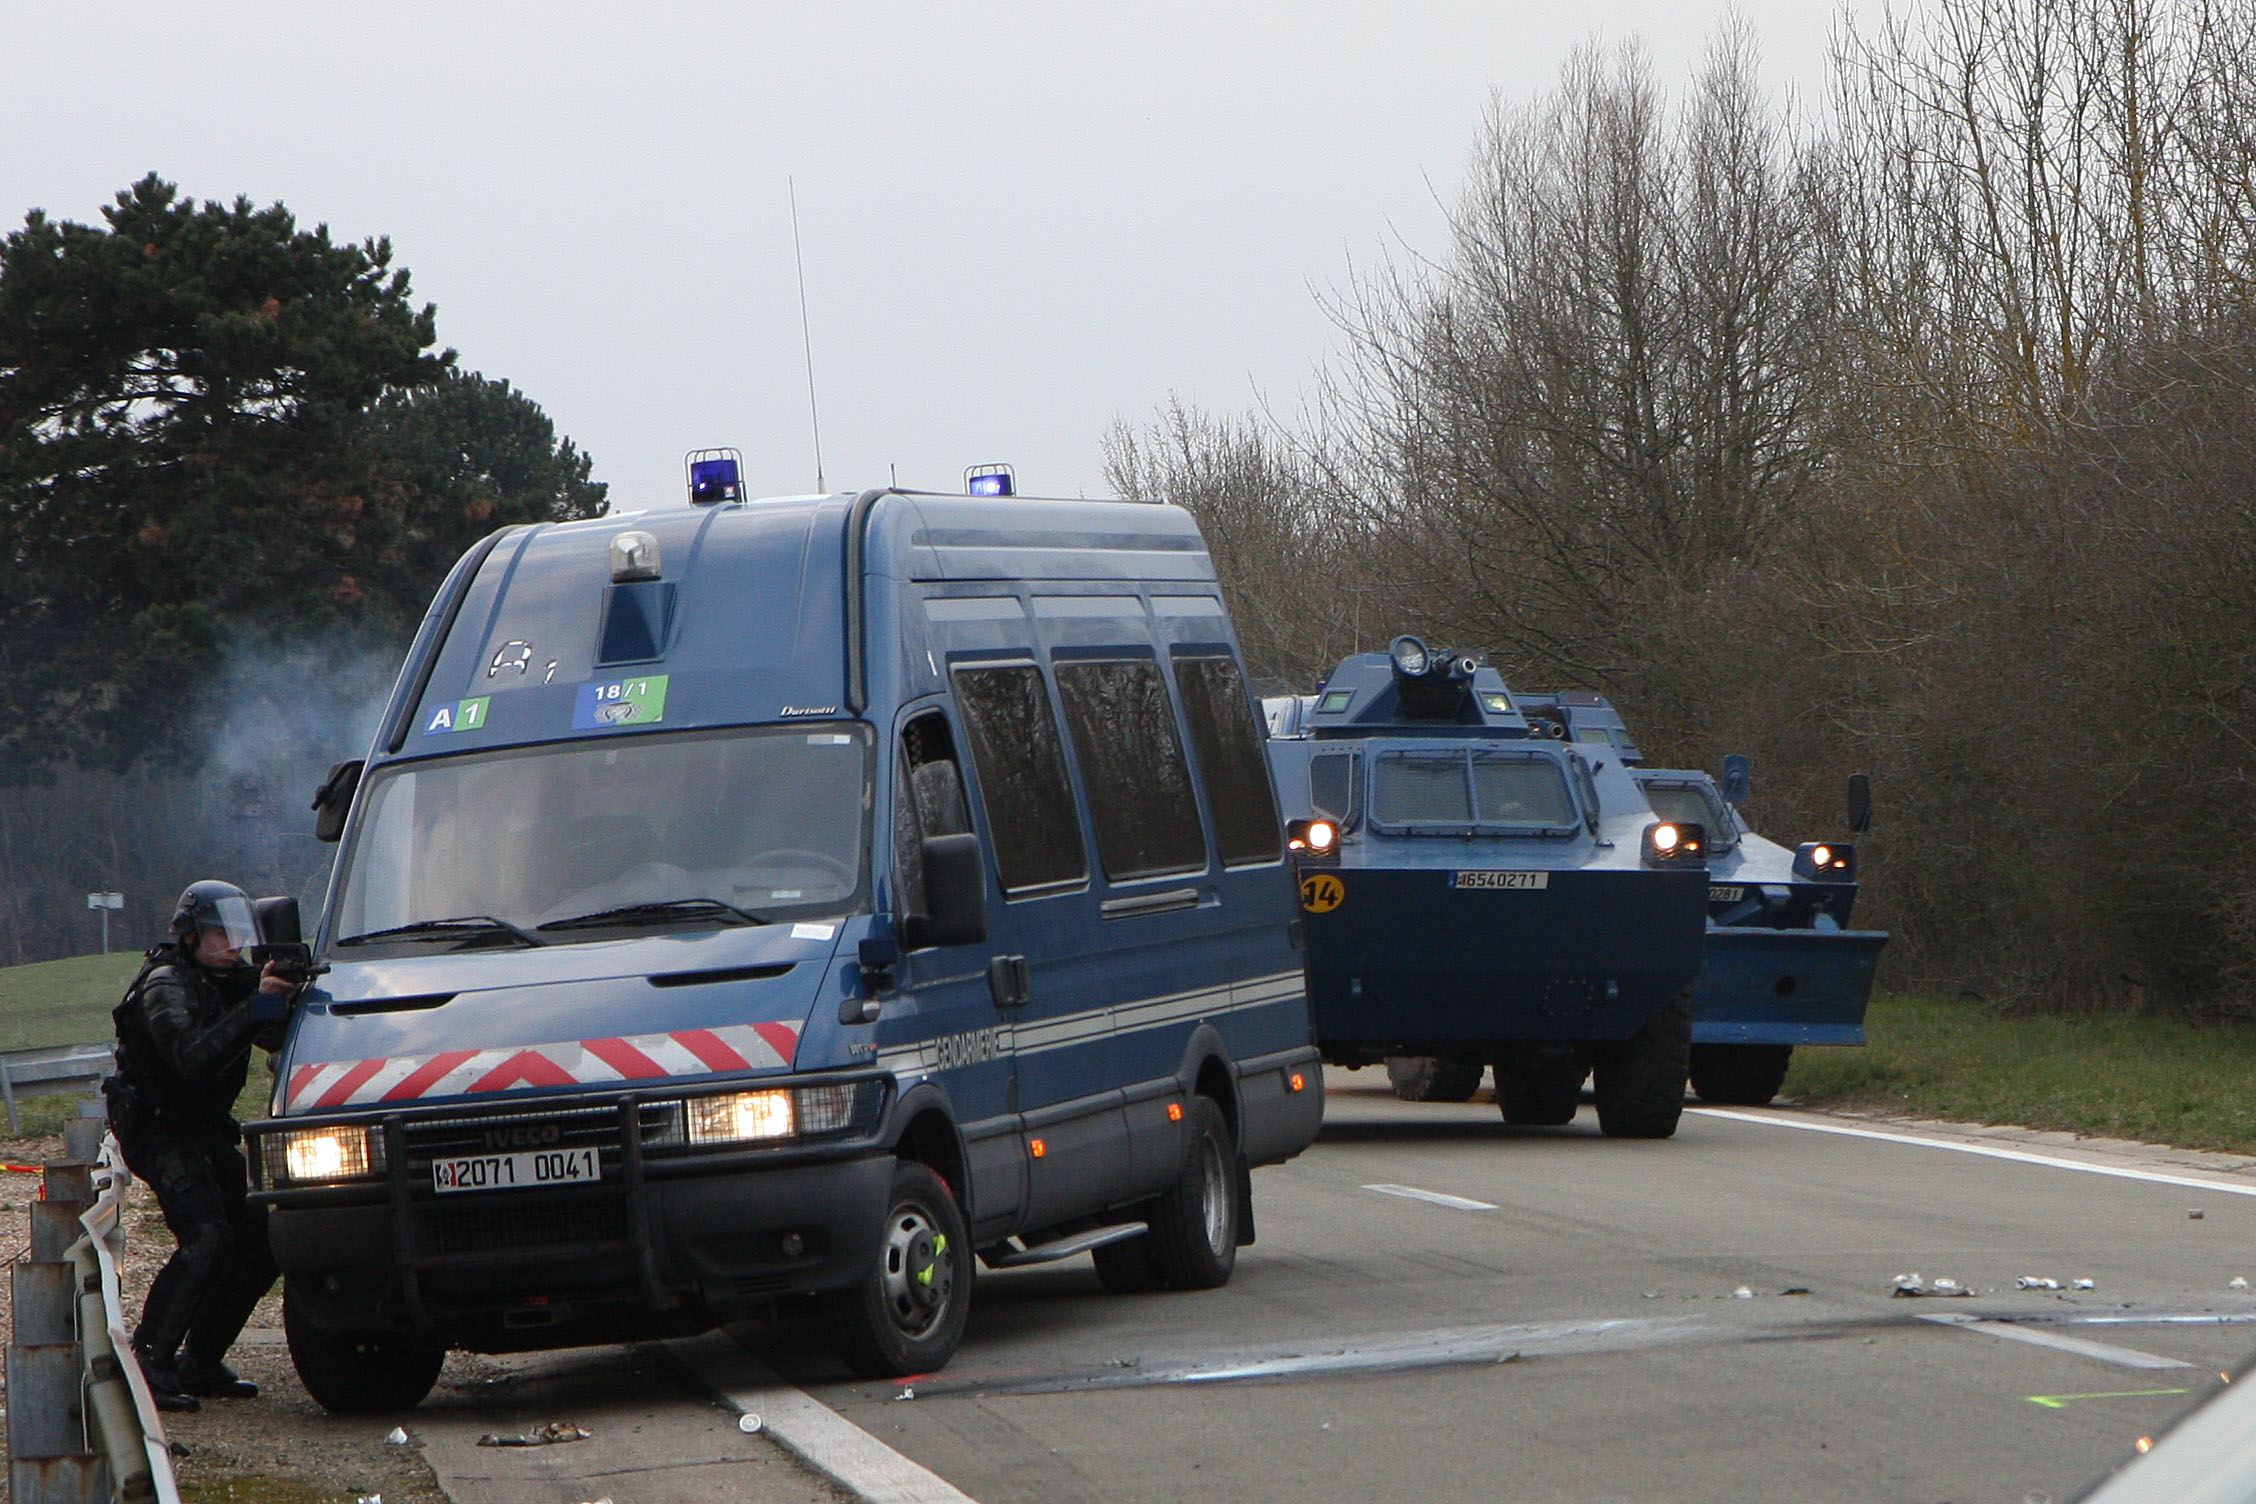 French Mobile Gendarmerie